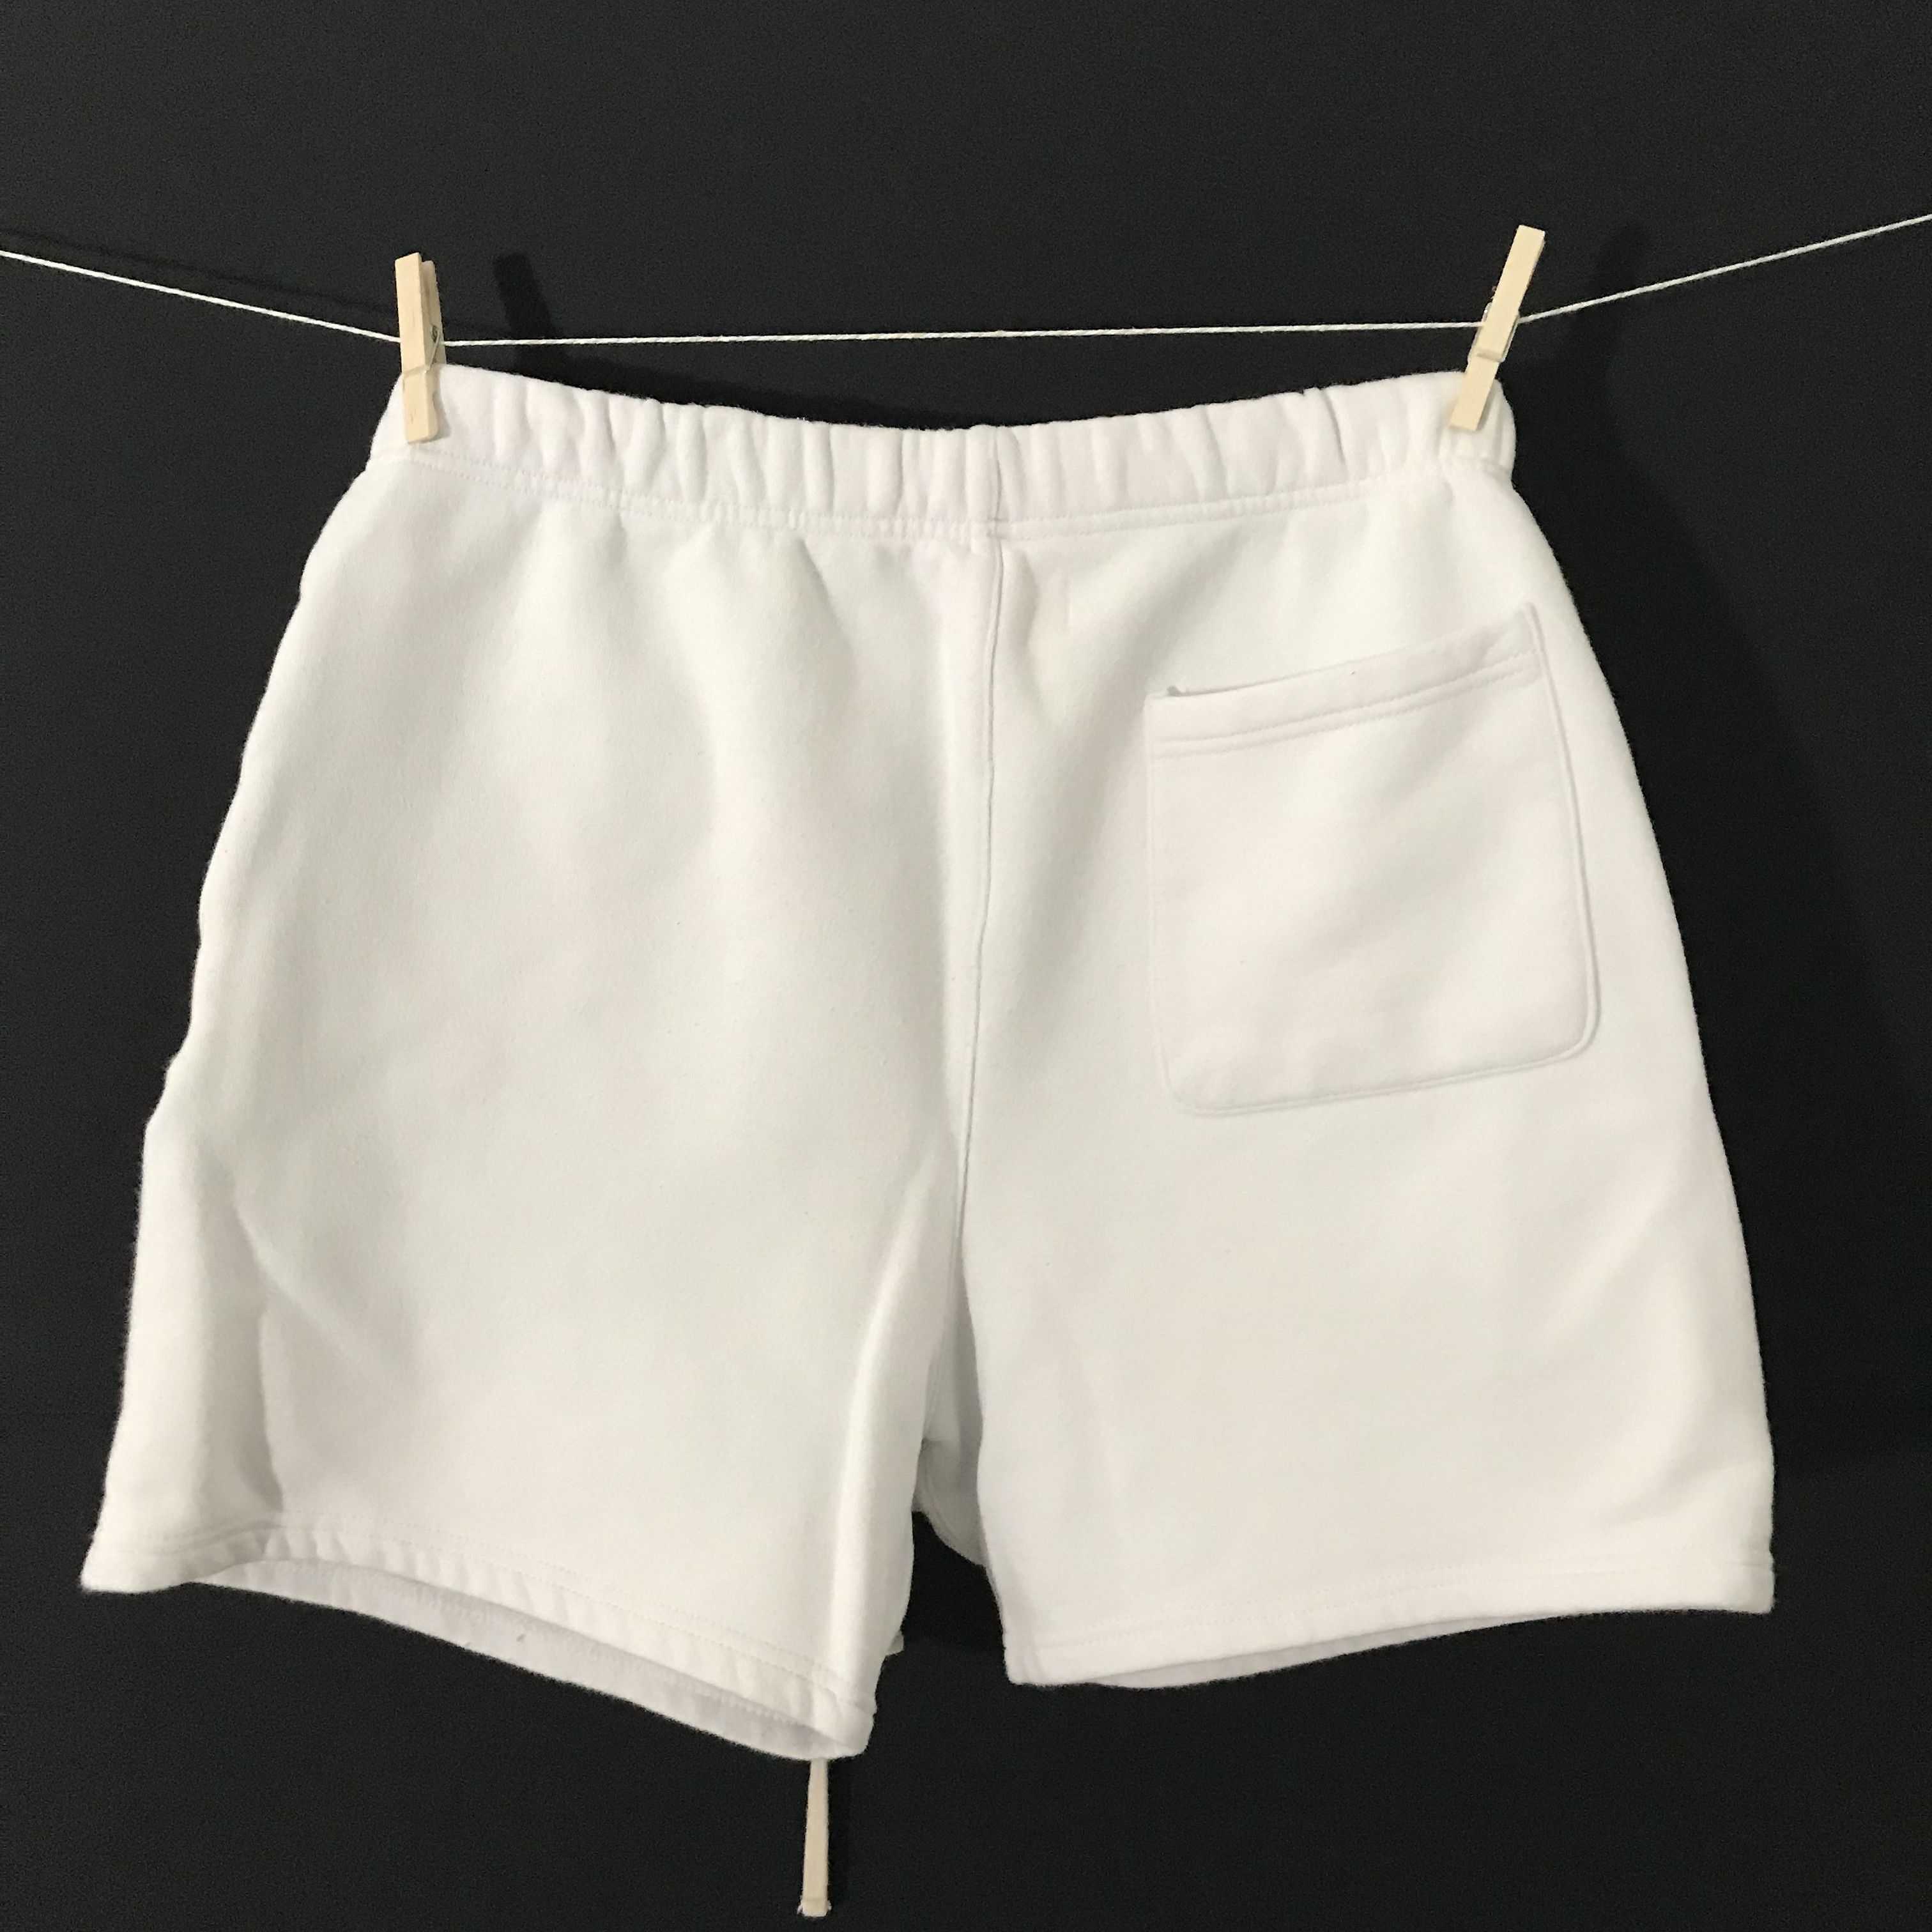 Pacsun ESSENTIALS White Graphic Sweat Shorts Size US 32 / EU 48 - 5 Preview